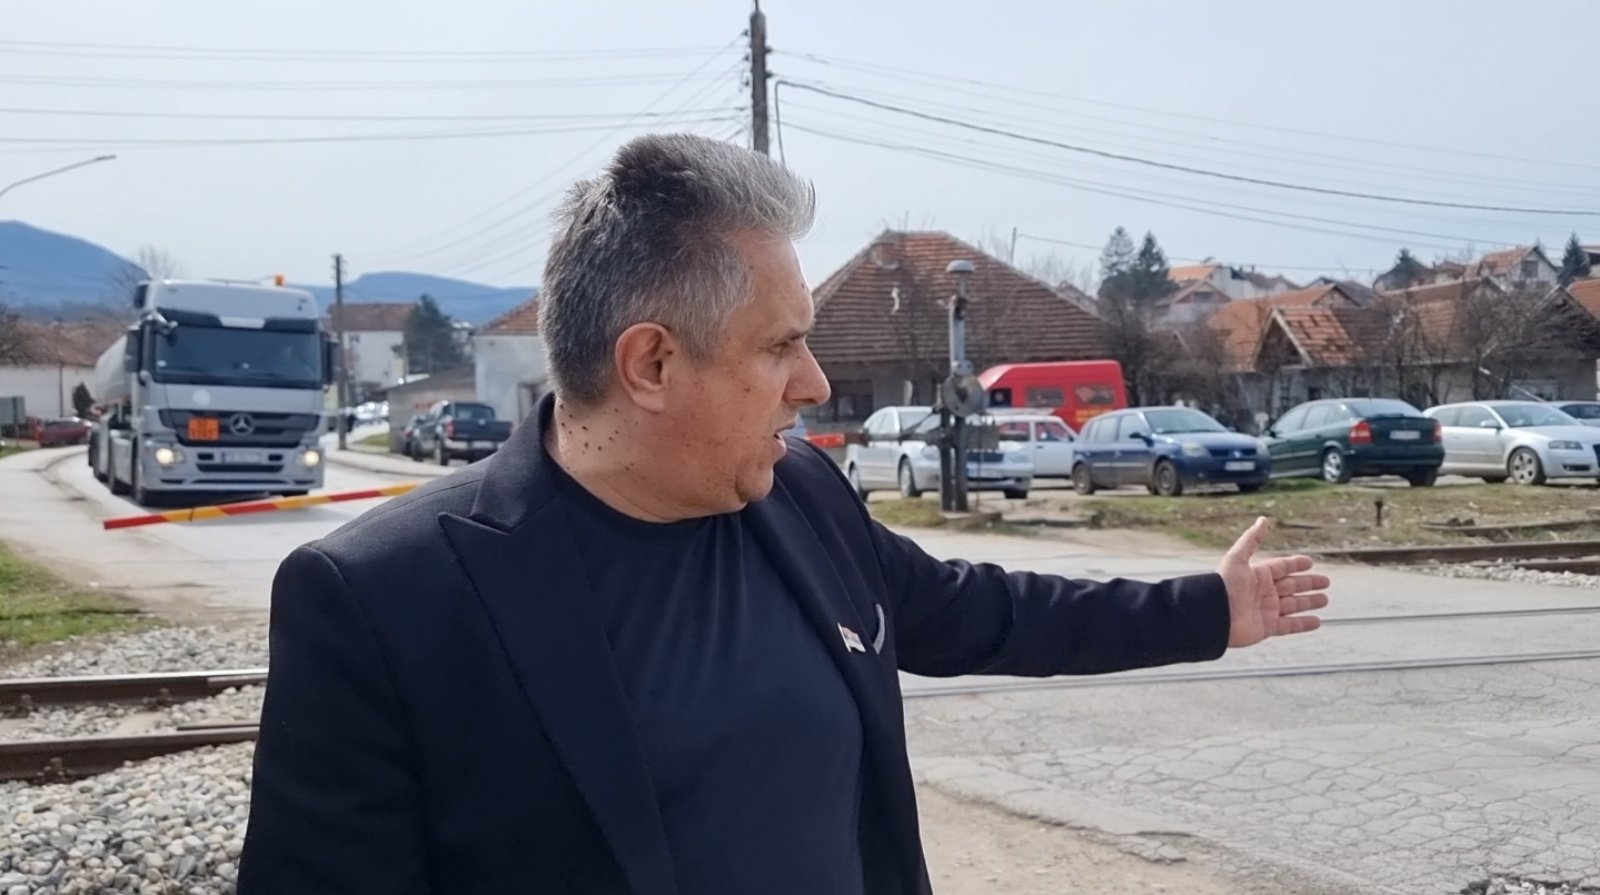 Miletić objašnjava problem, foto: Video, PrtScr